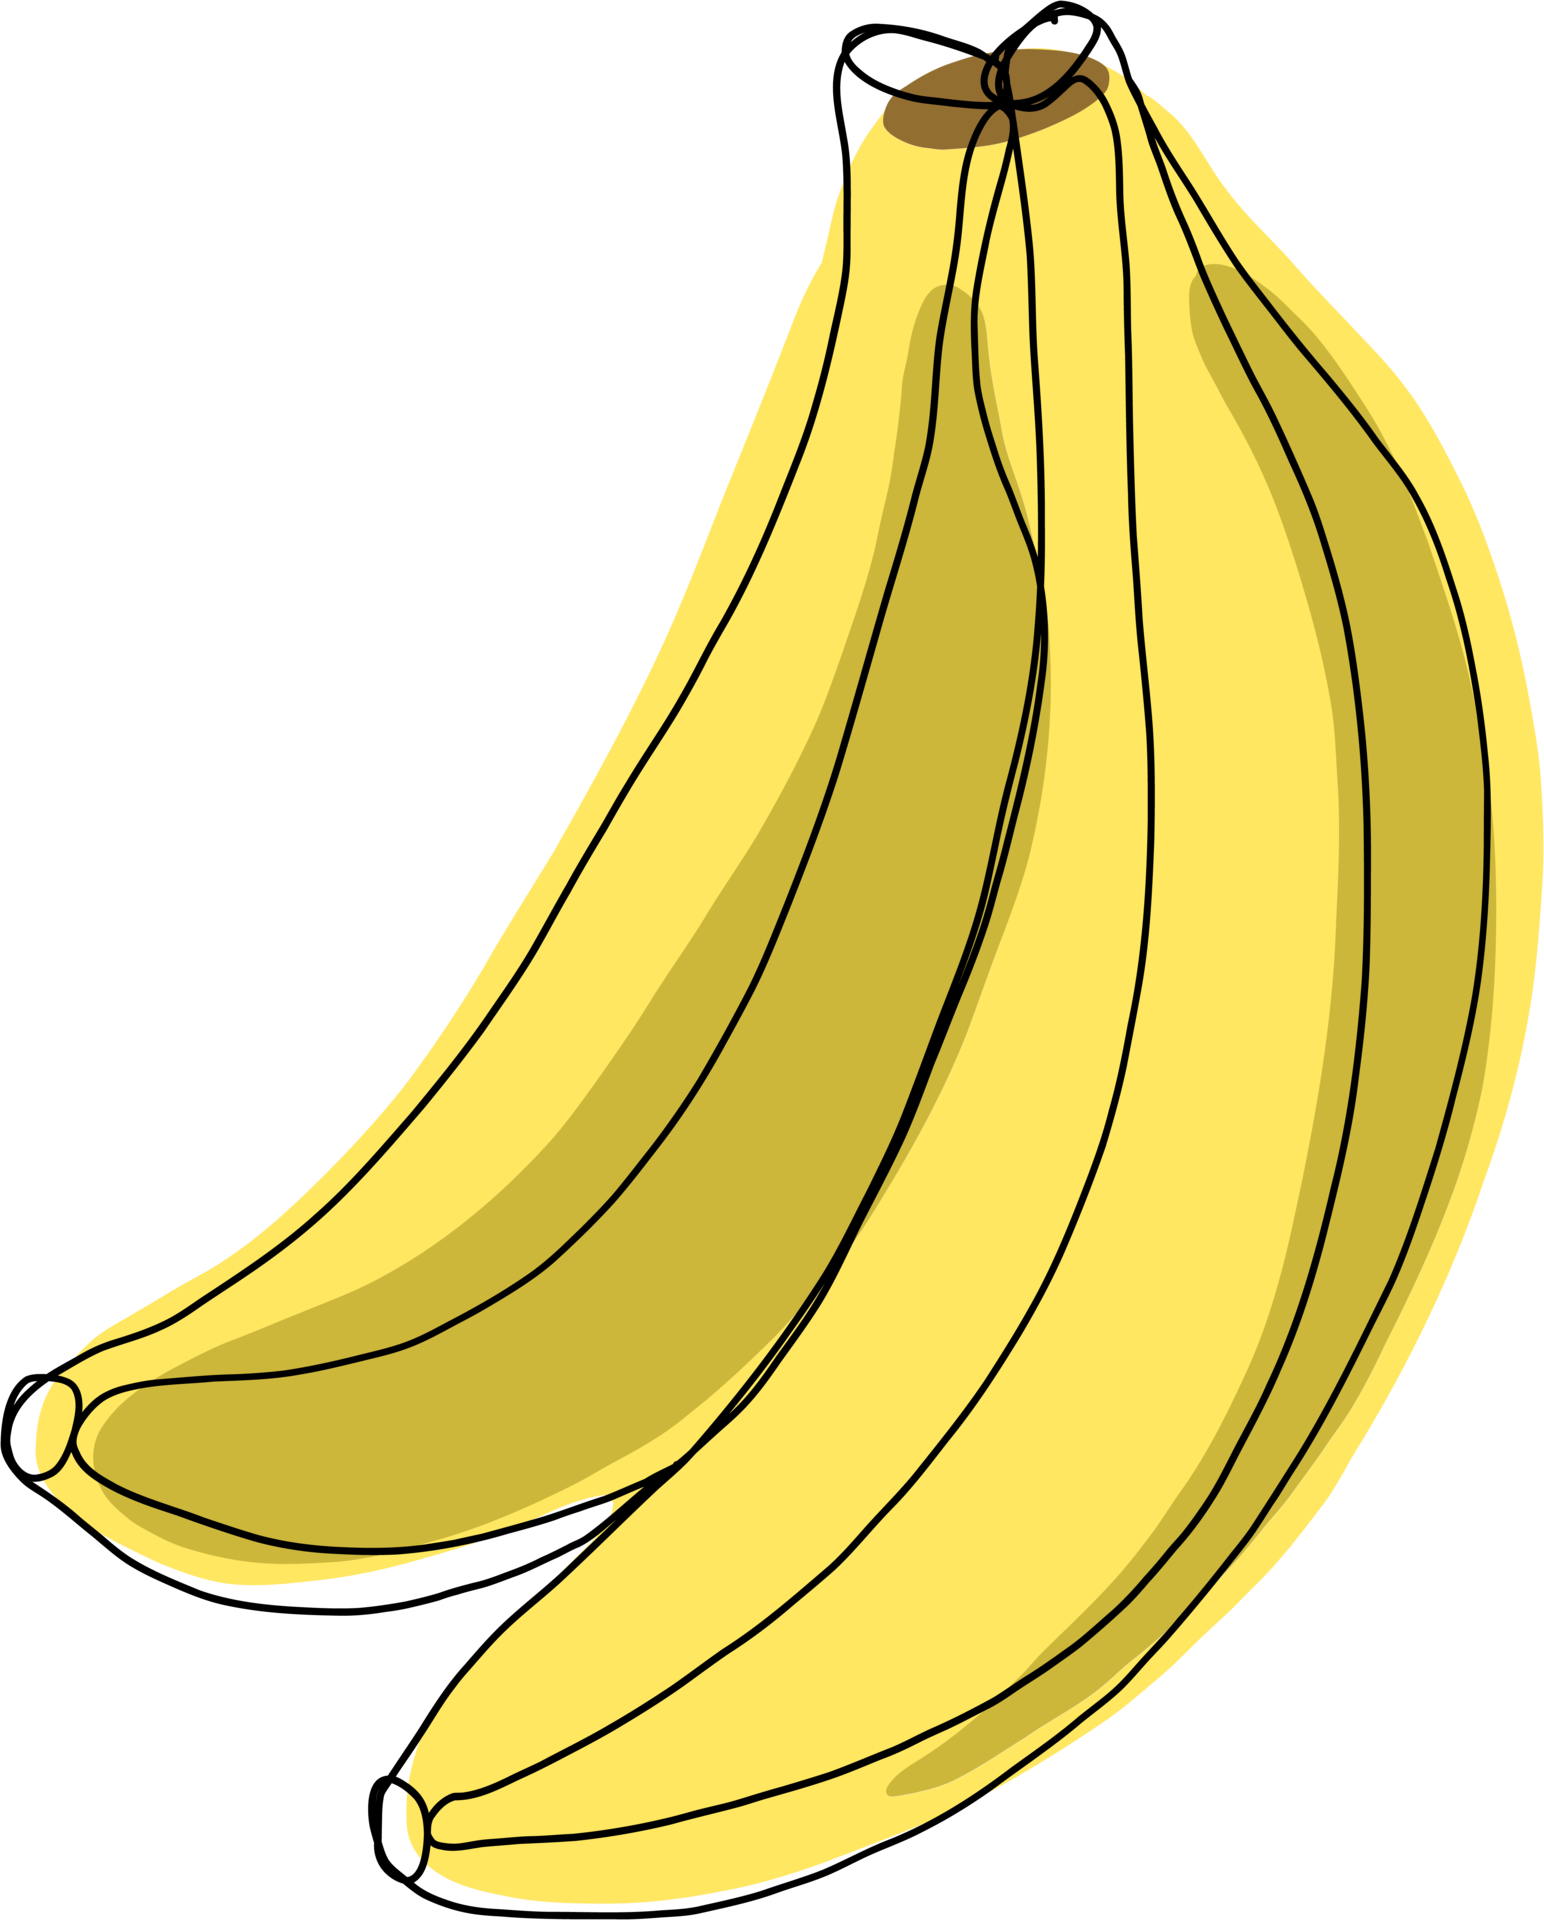 Simplicity banana fruit freehand continuous... - Stock Illustration  [91197532] - PIXTA